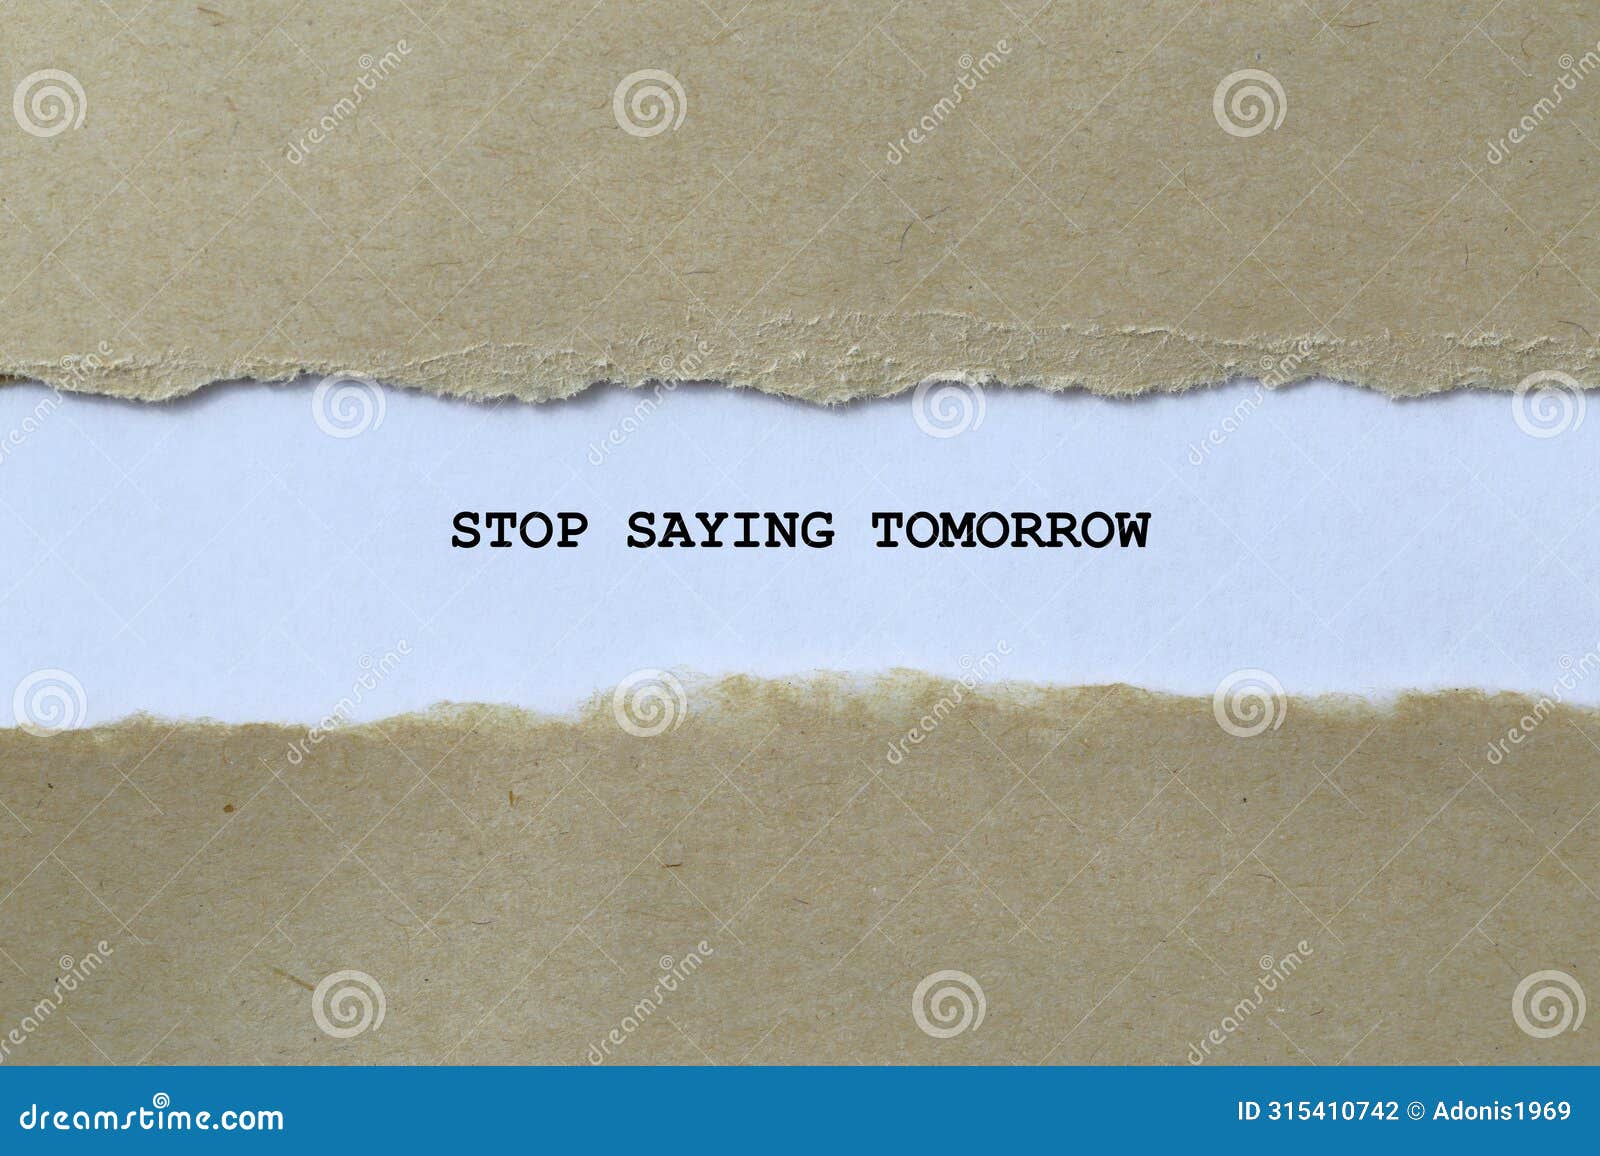 stop saying tomorrow on white paper